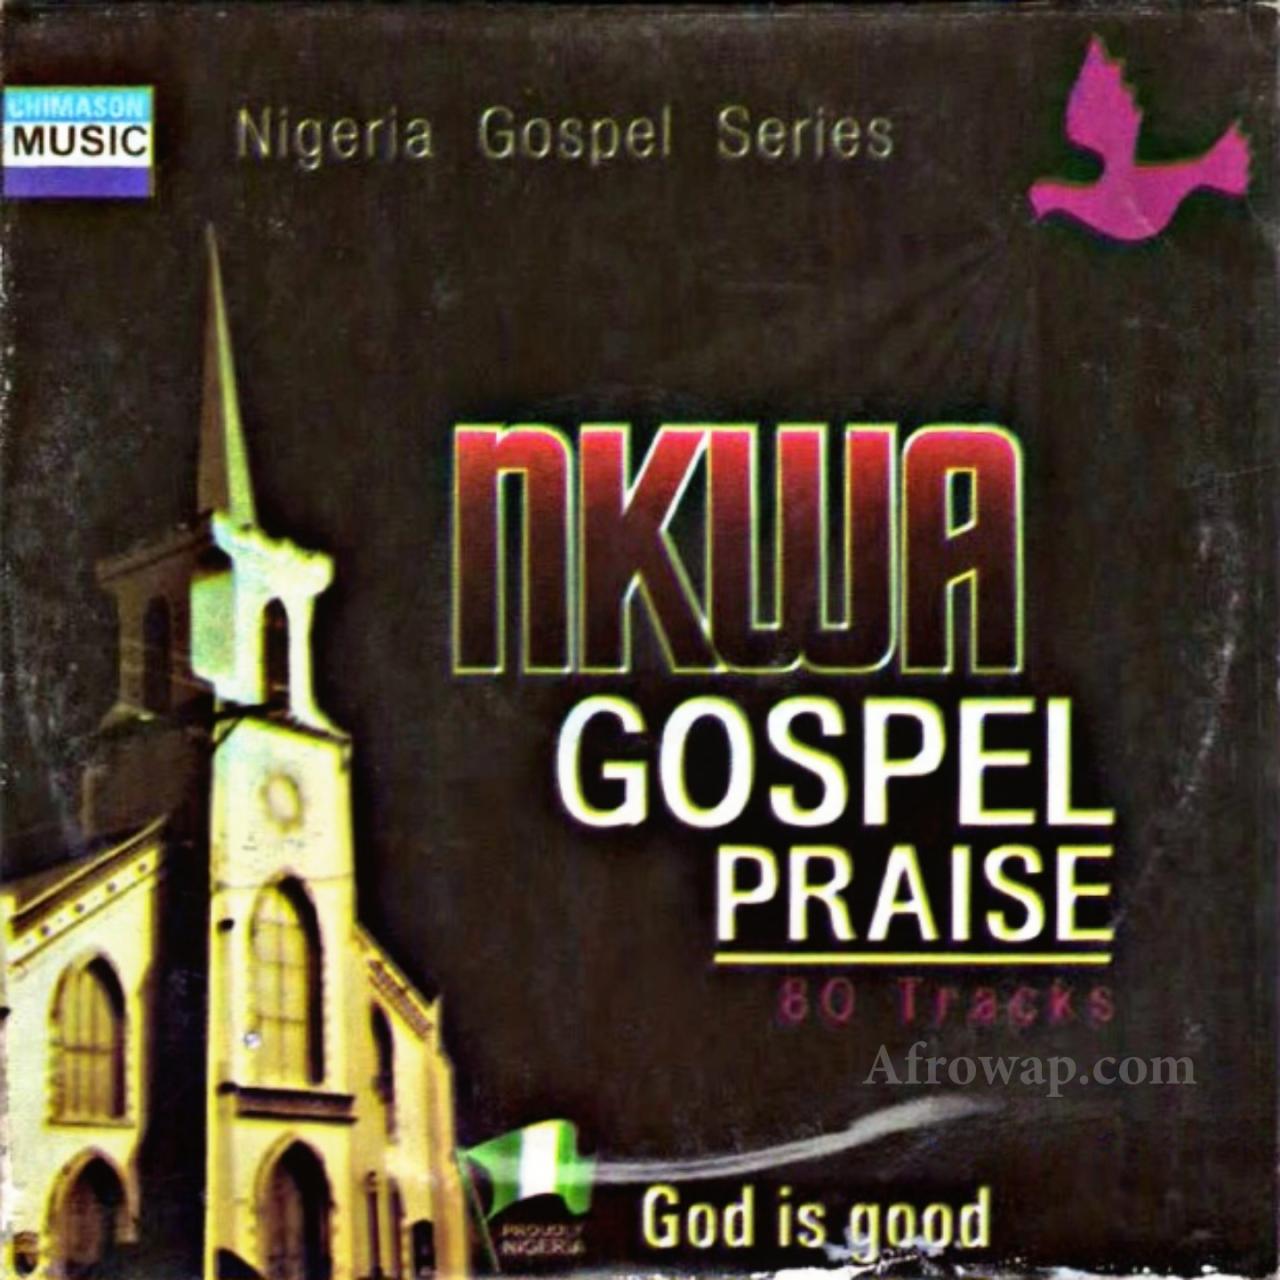 Nigeria Gospel Series - Nkwa Gospel Praise (Track 2)